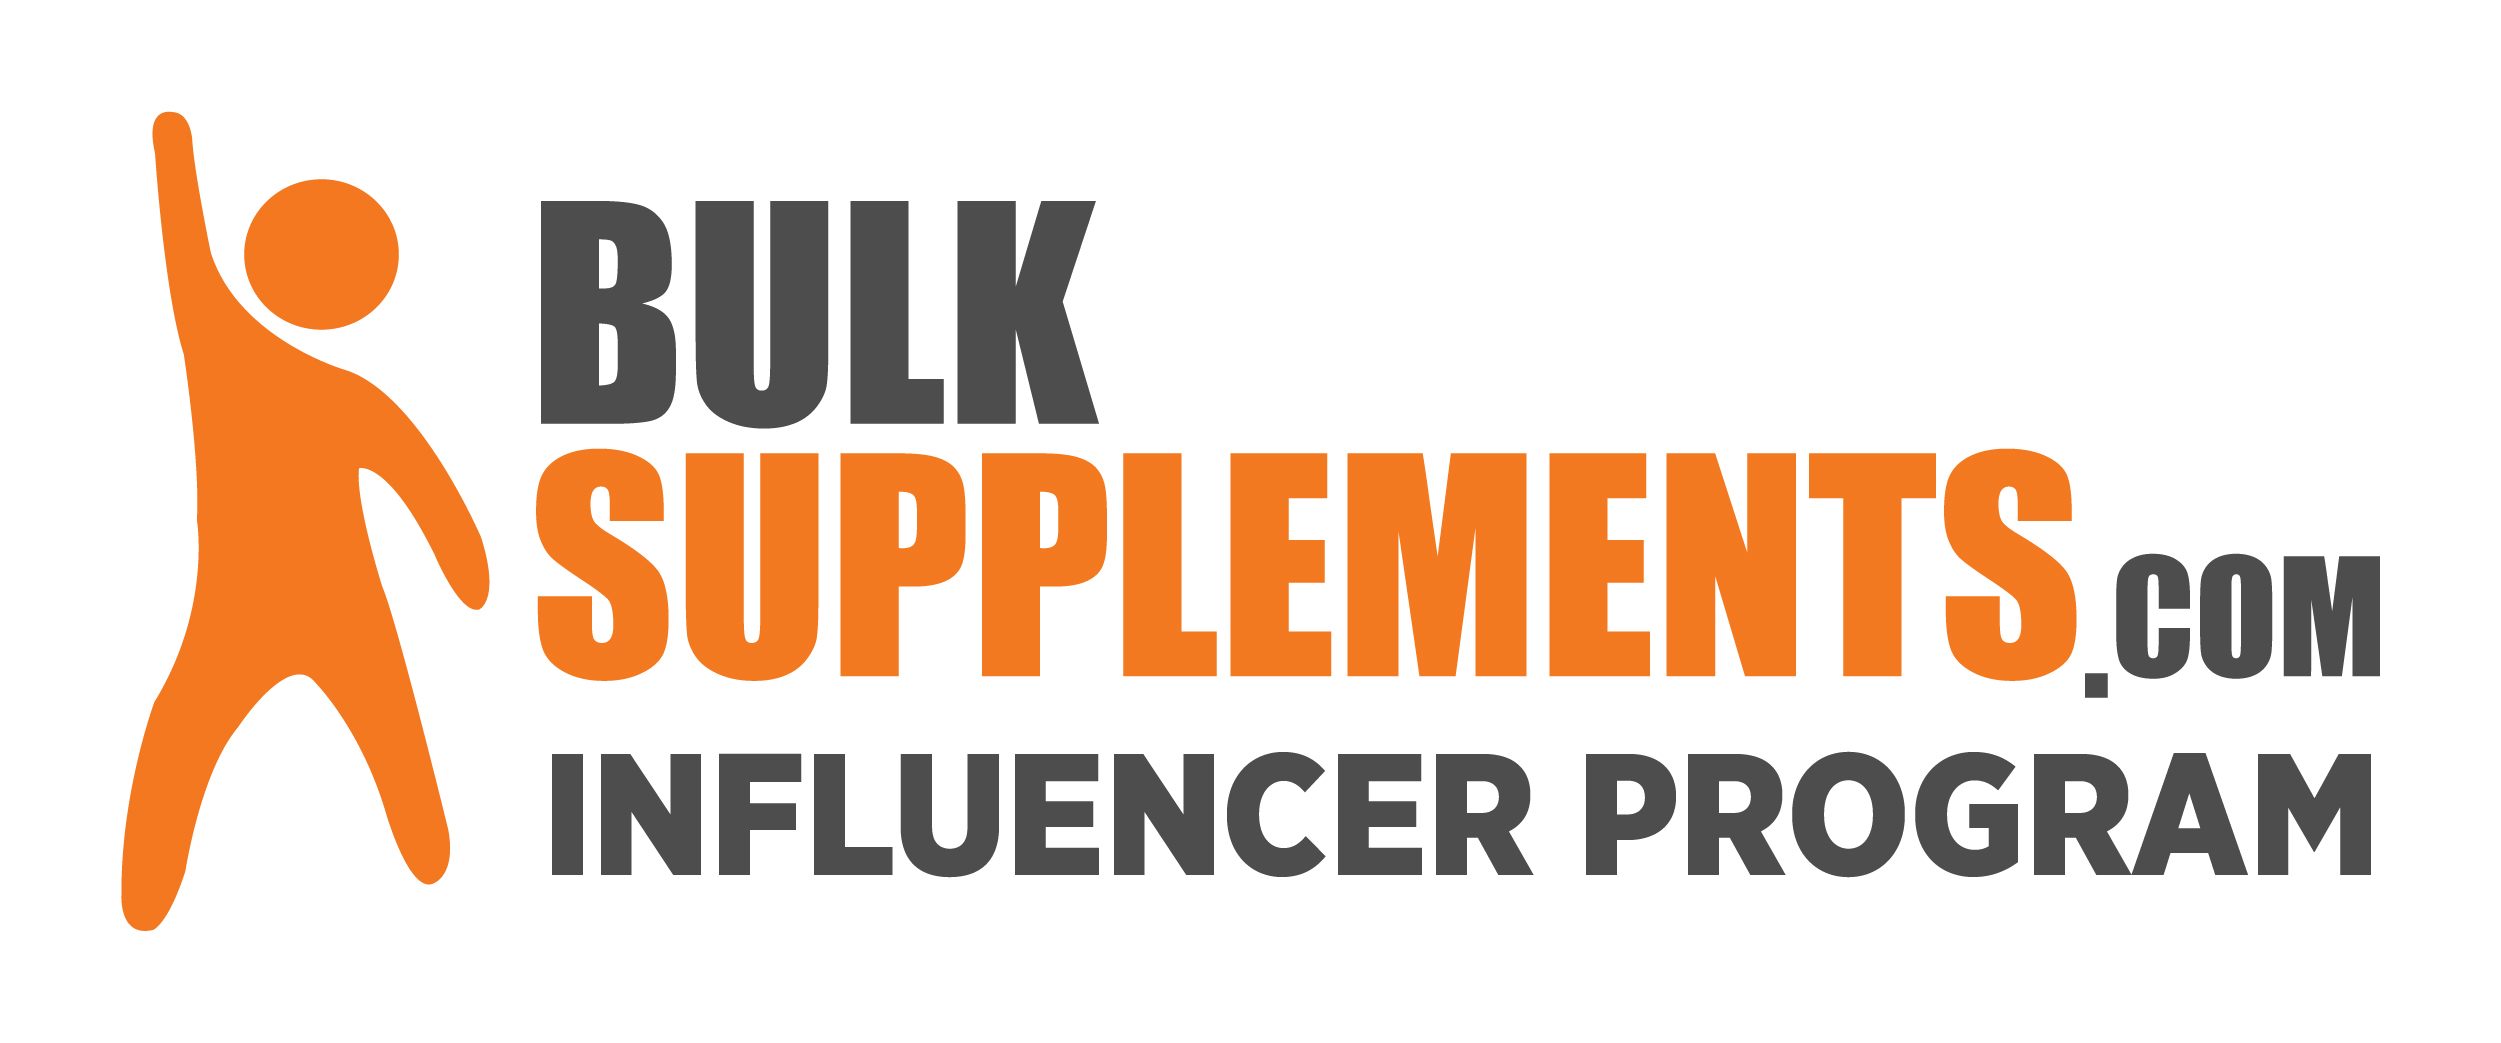 BulkSupplements.com Influencer Program